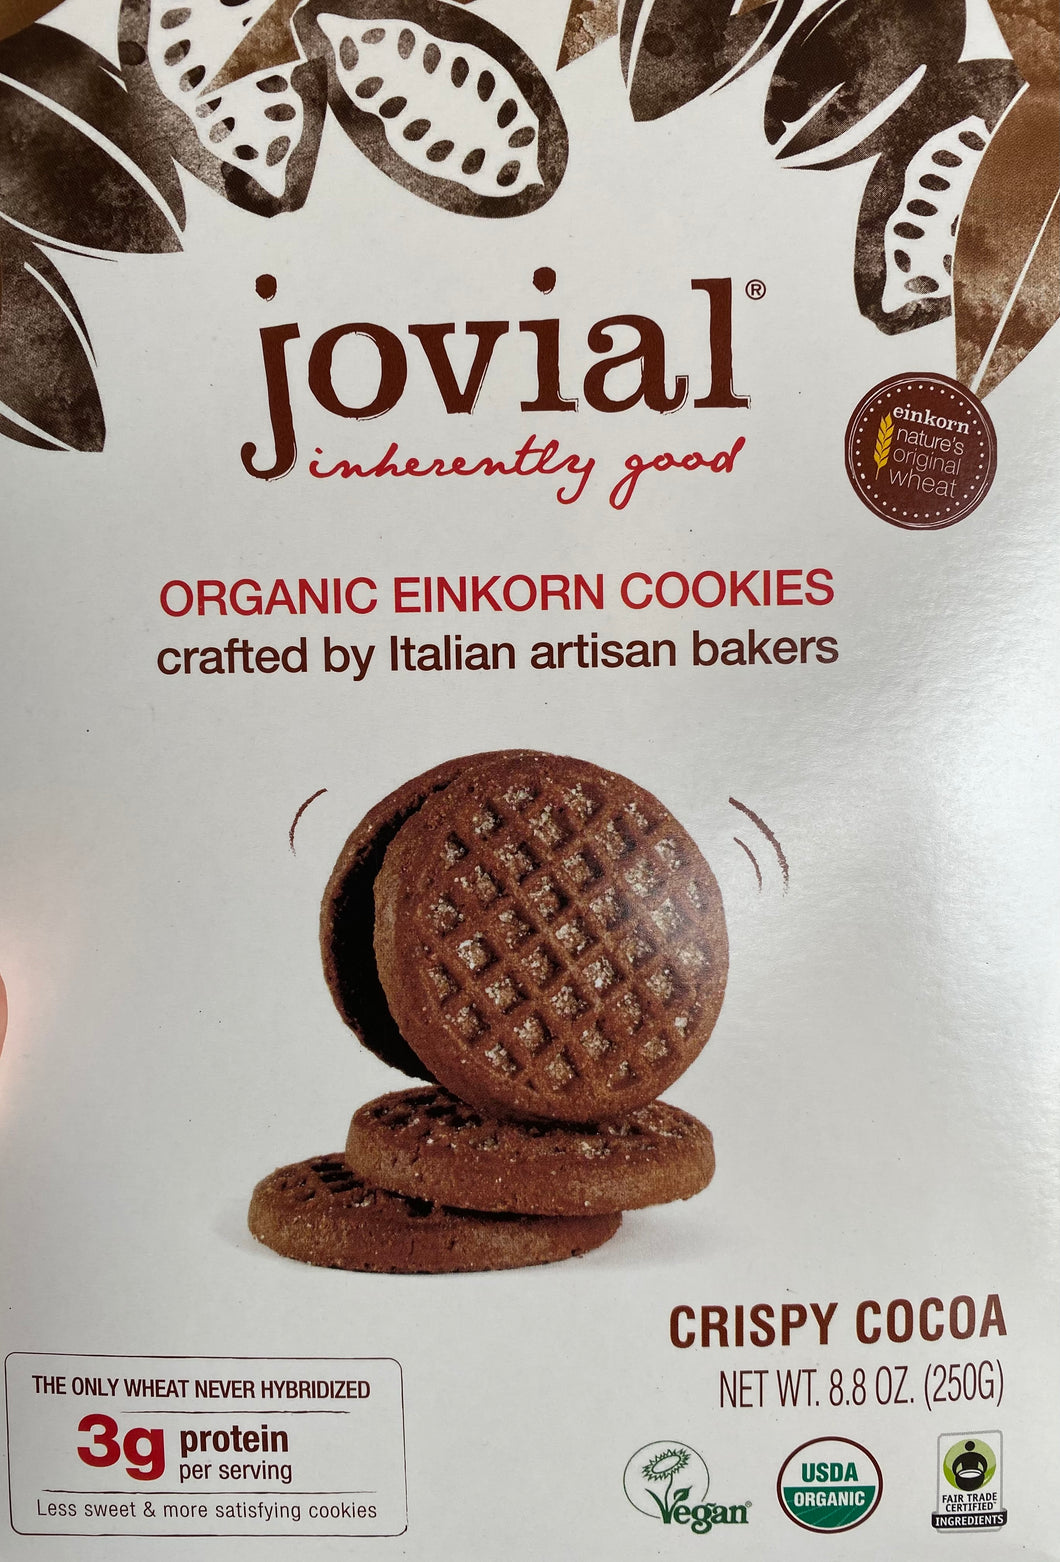 Cookies, Einkorn Crispy Cocoa, Organic, Jovial